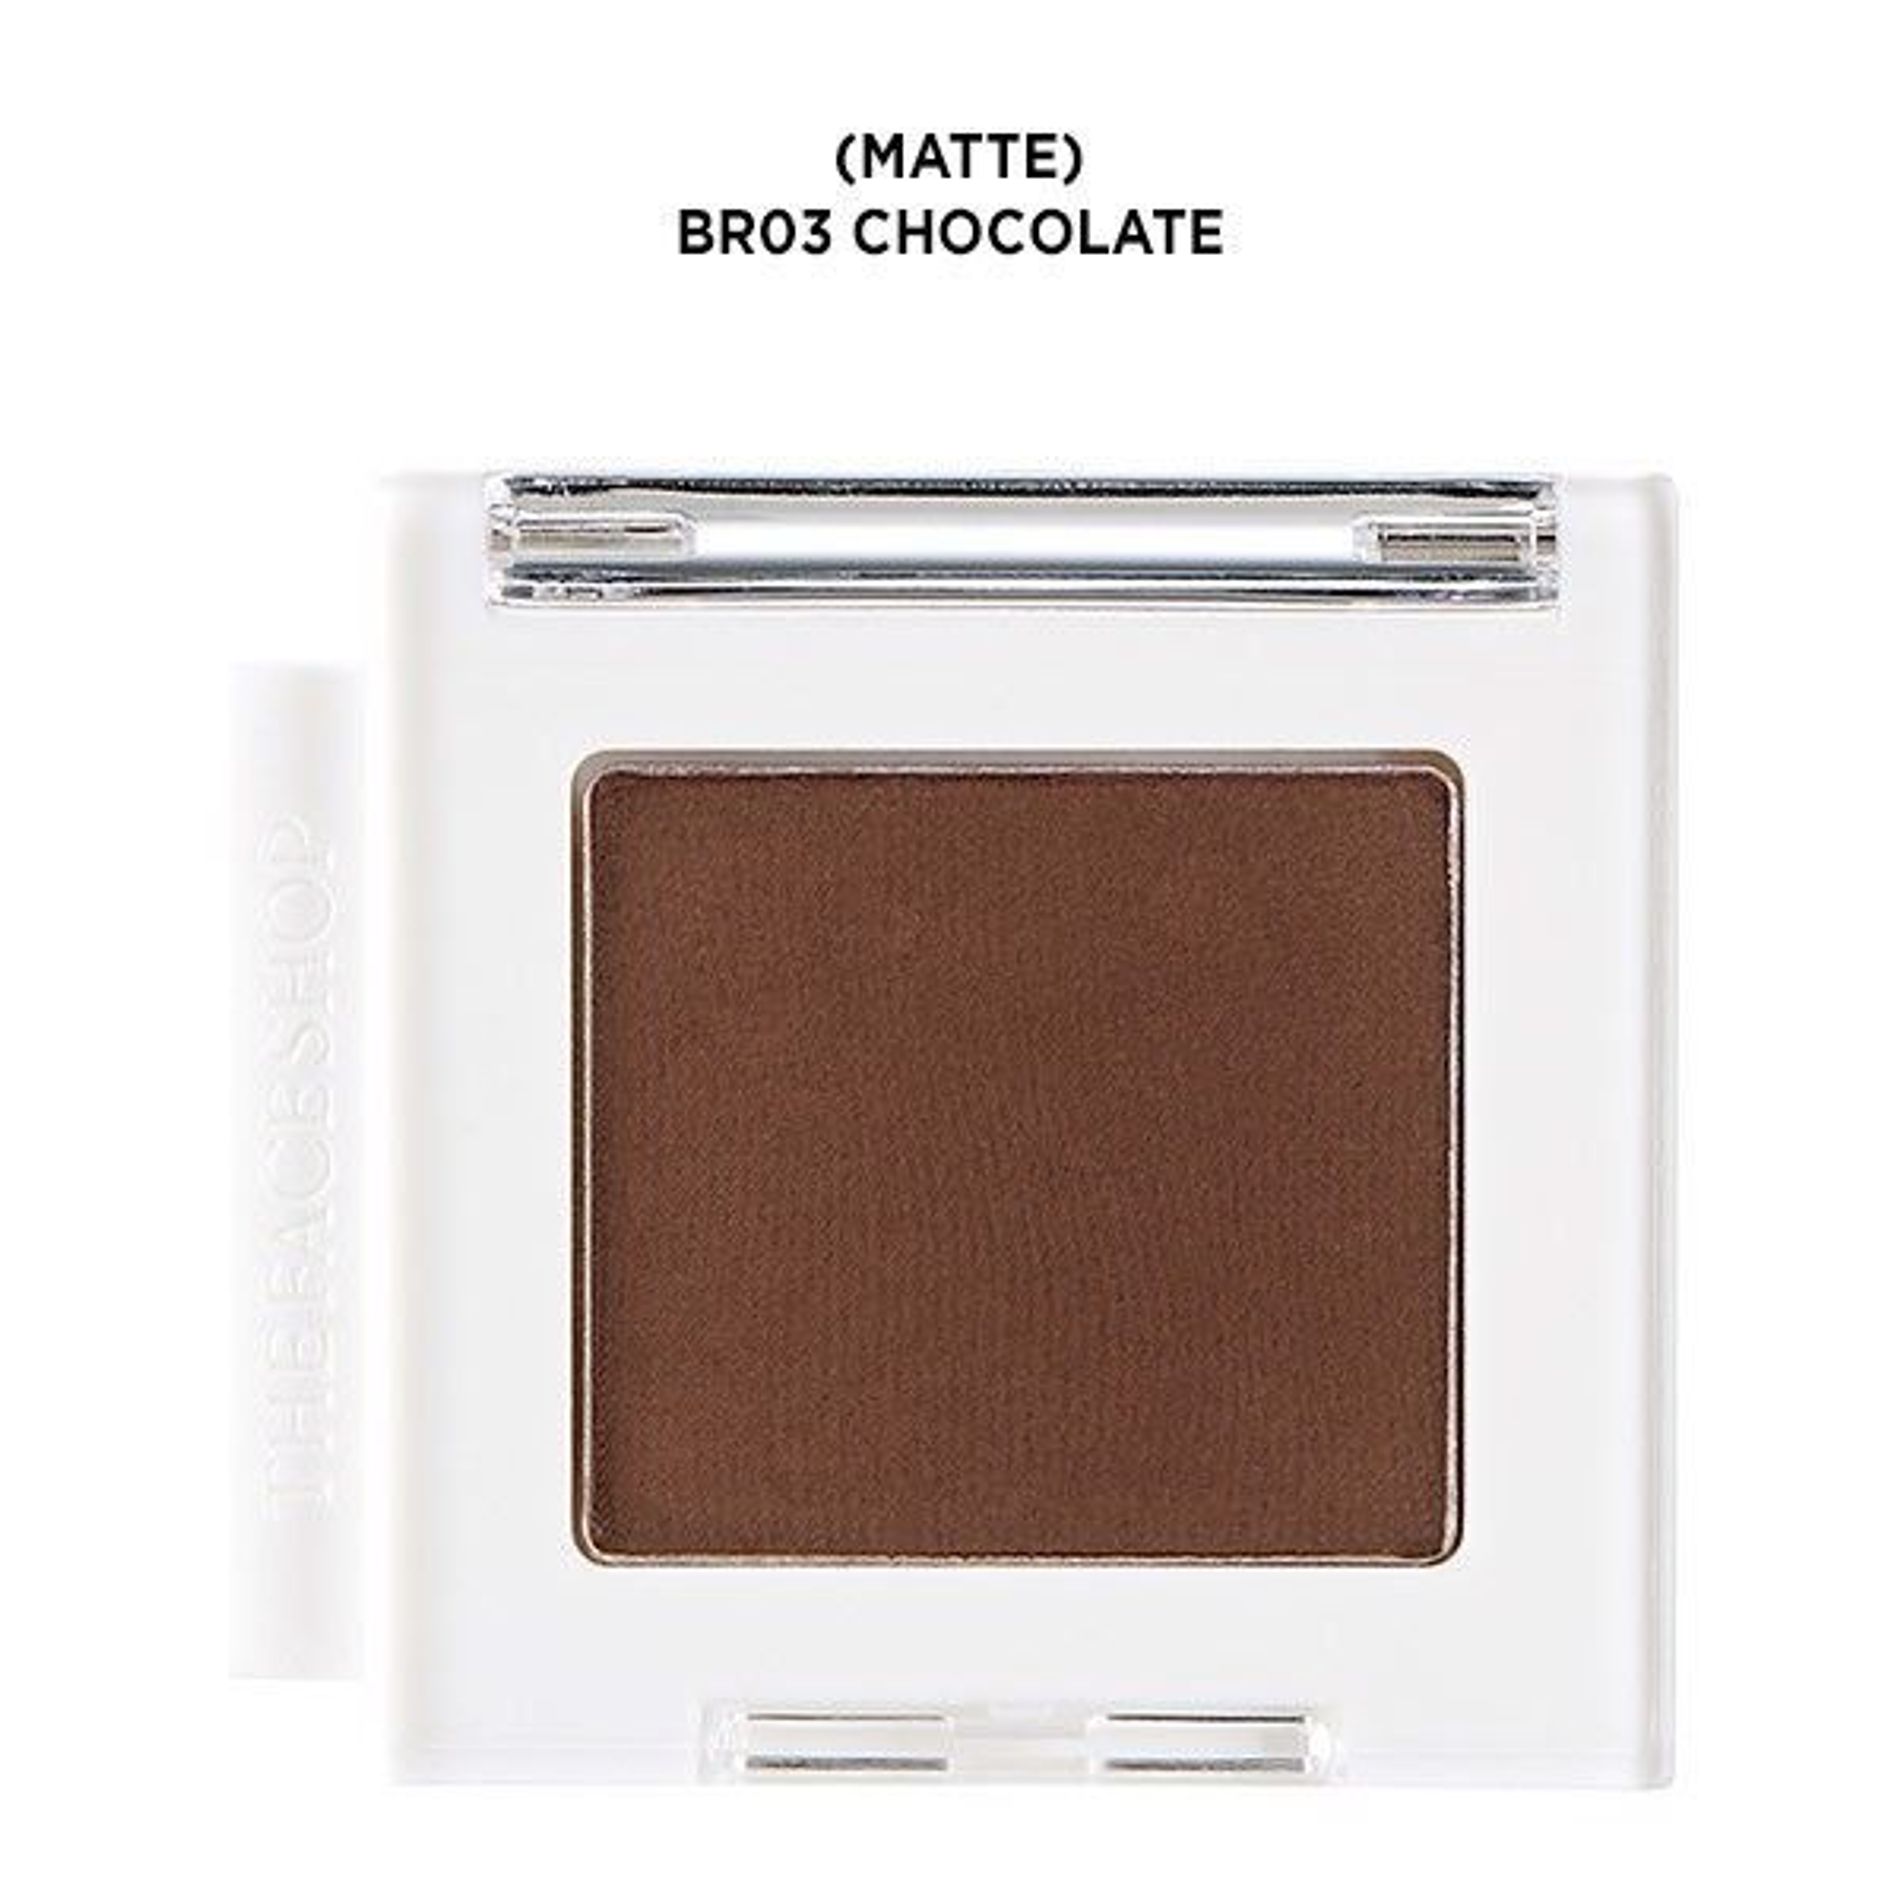 mau-mat-dang-li-mono-cube-eyeshadow-matte-br03-chocolate-2